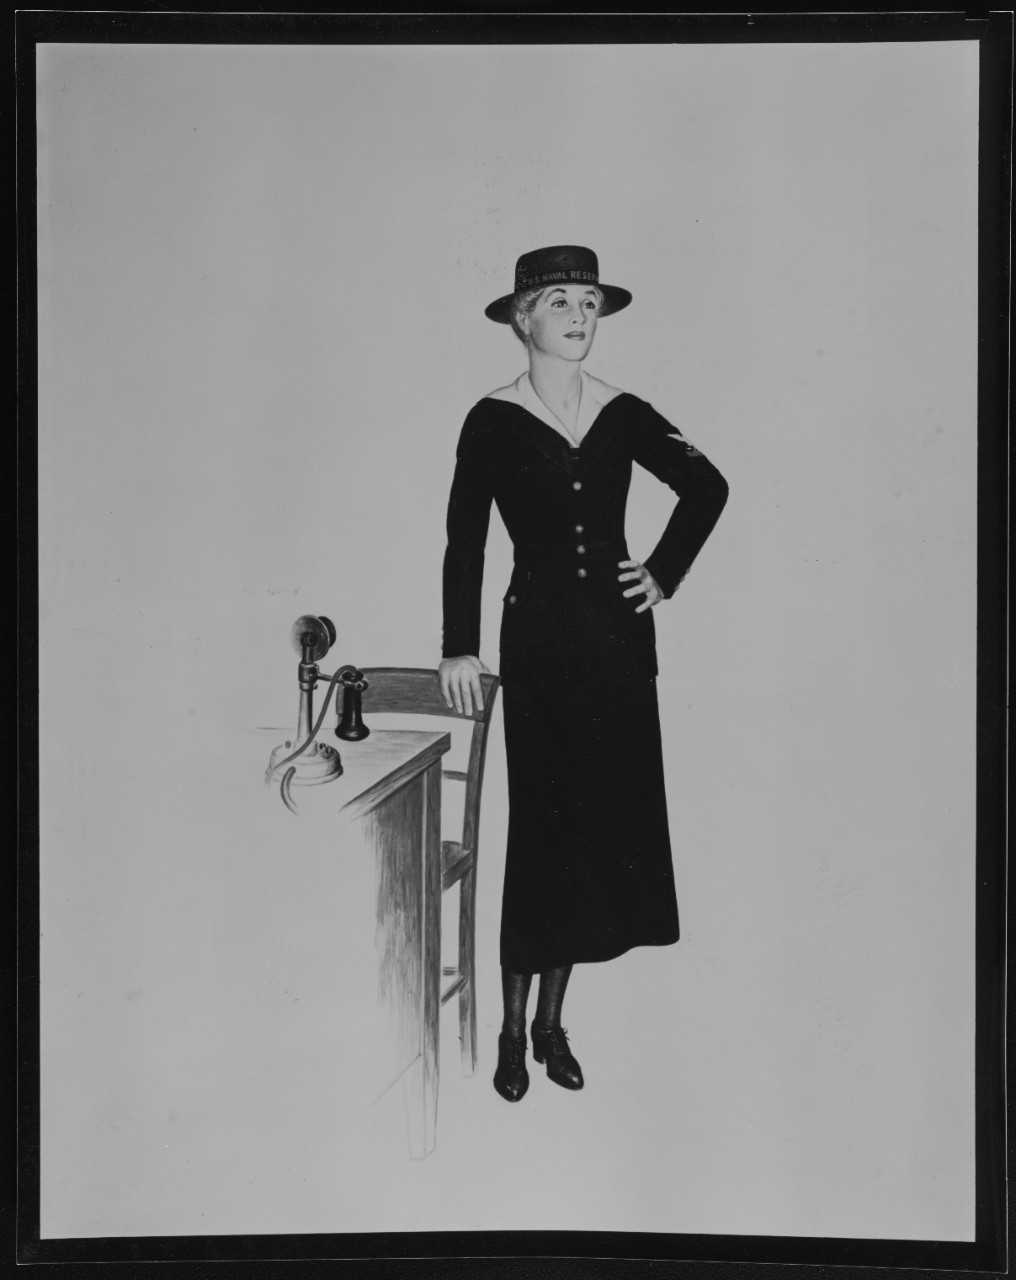 Yeomanette's Uniform, 1910-1920